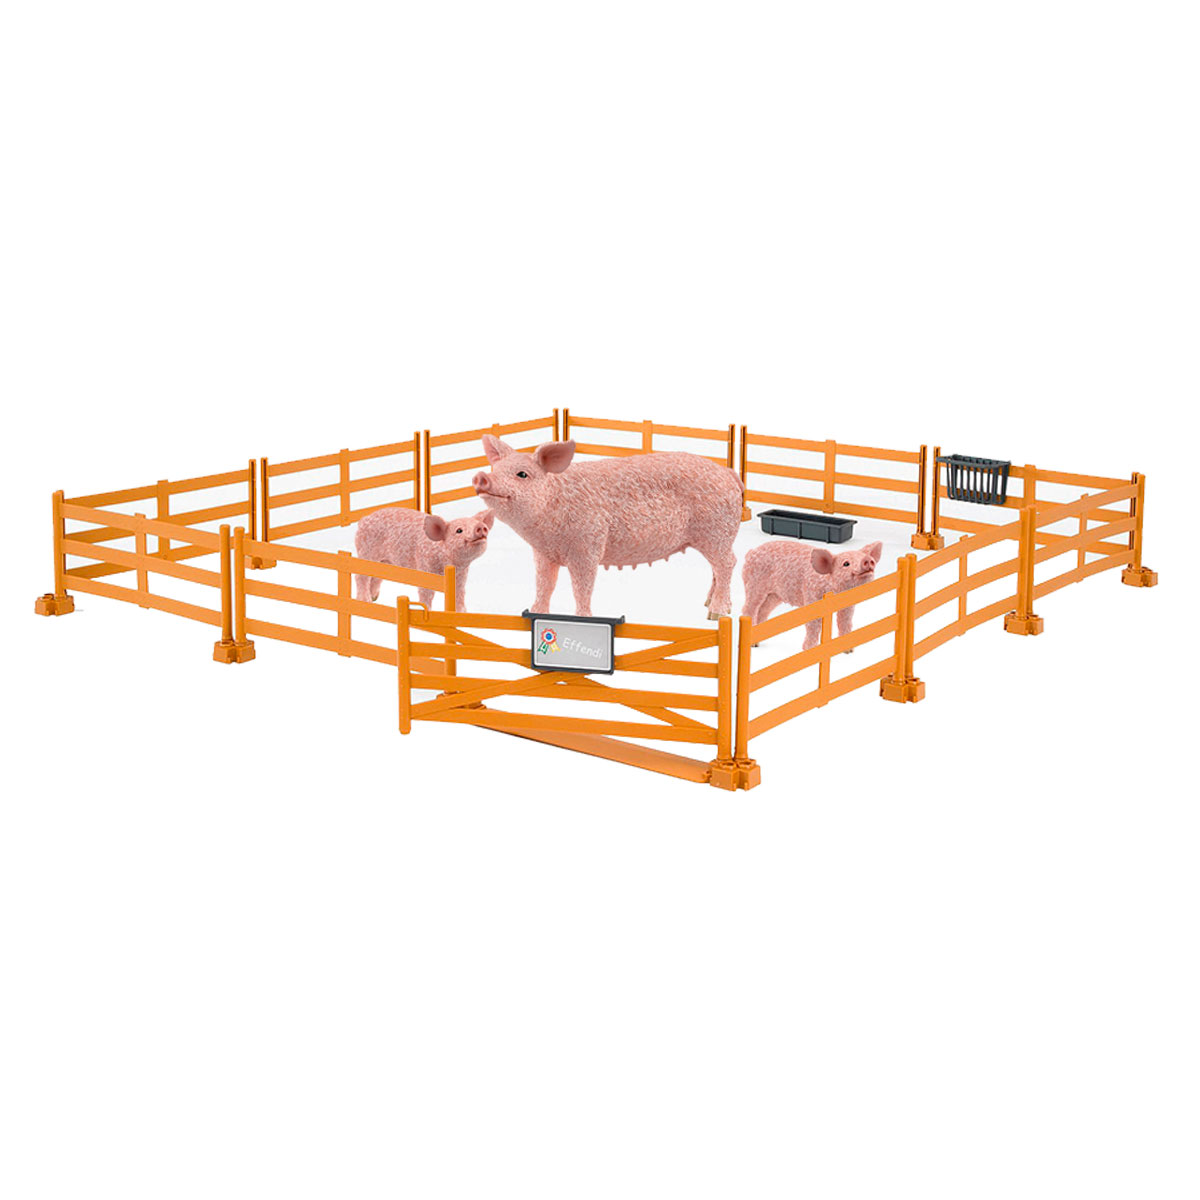 Piara de Cerdos de Juguete Ruraltoys